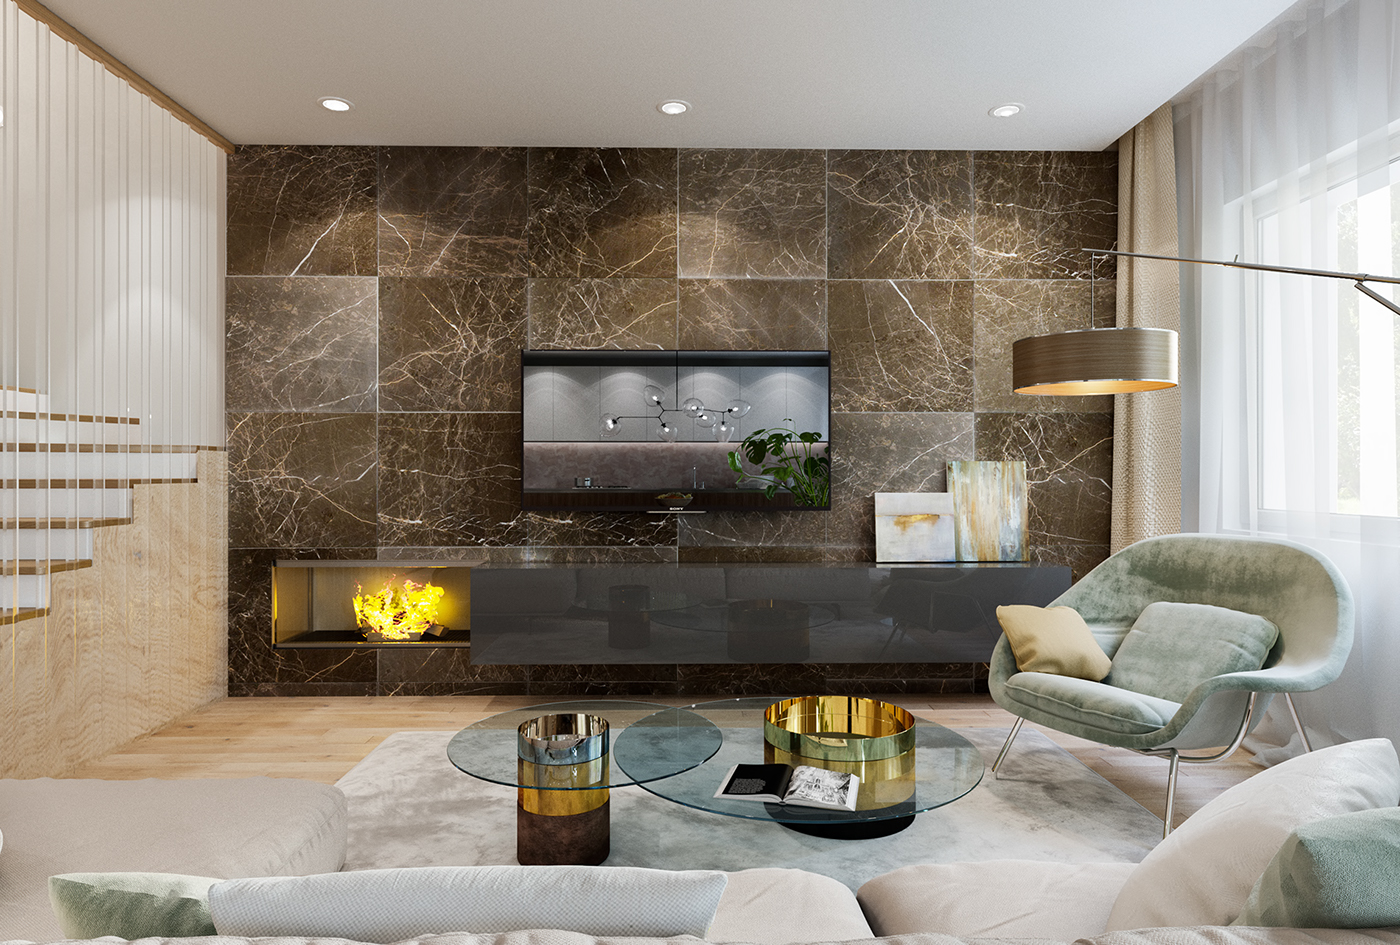 3ds max archviz interiordesign corona render  PS living room kitchen